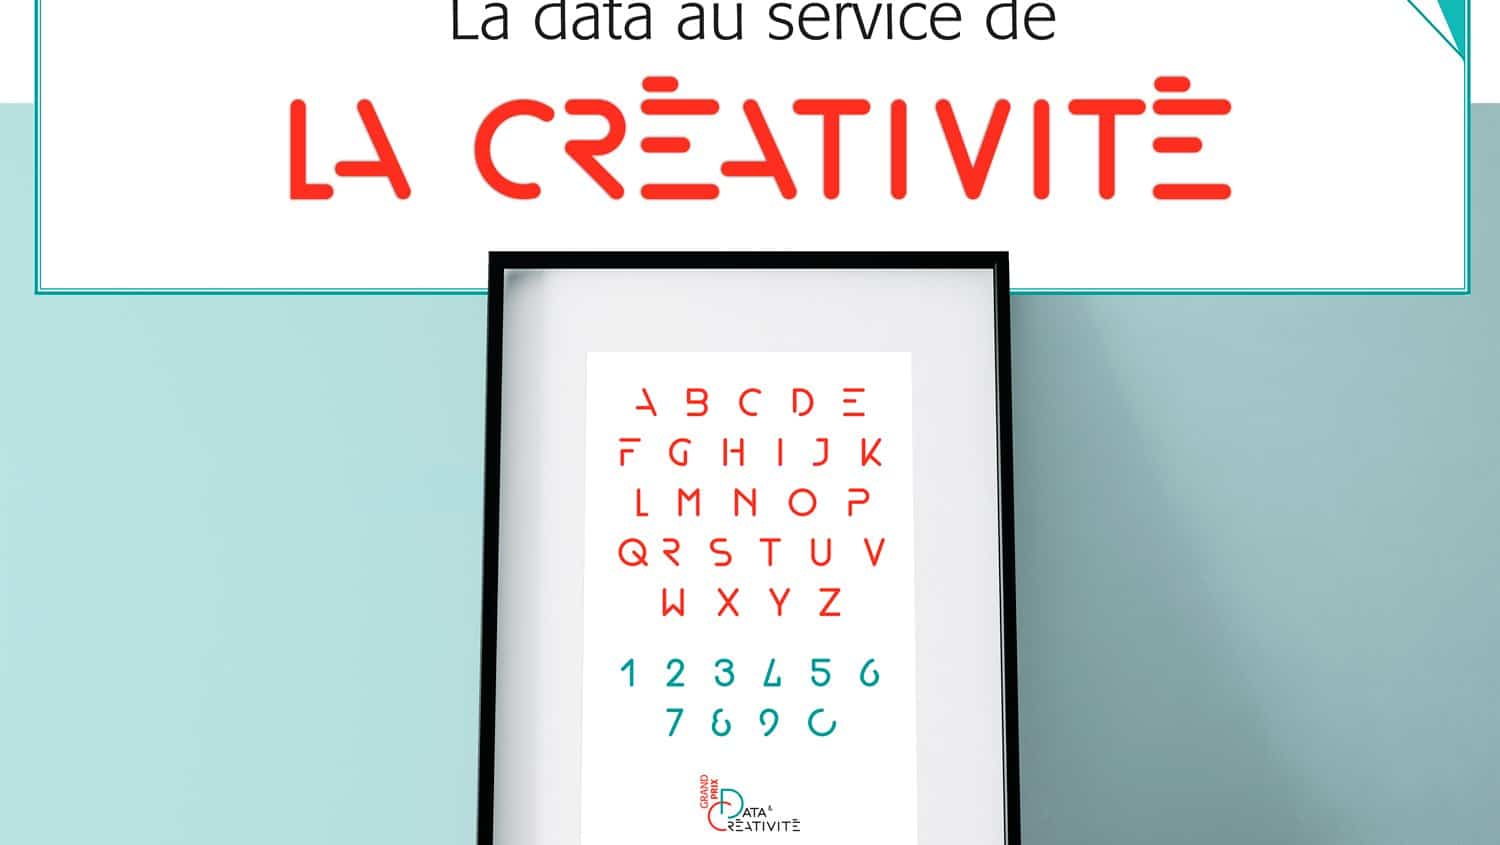 data-creativite_banniere